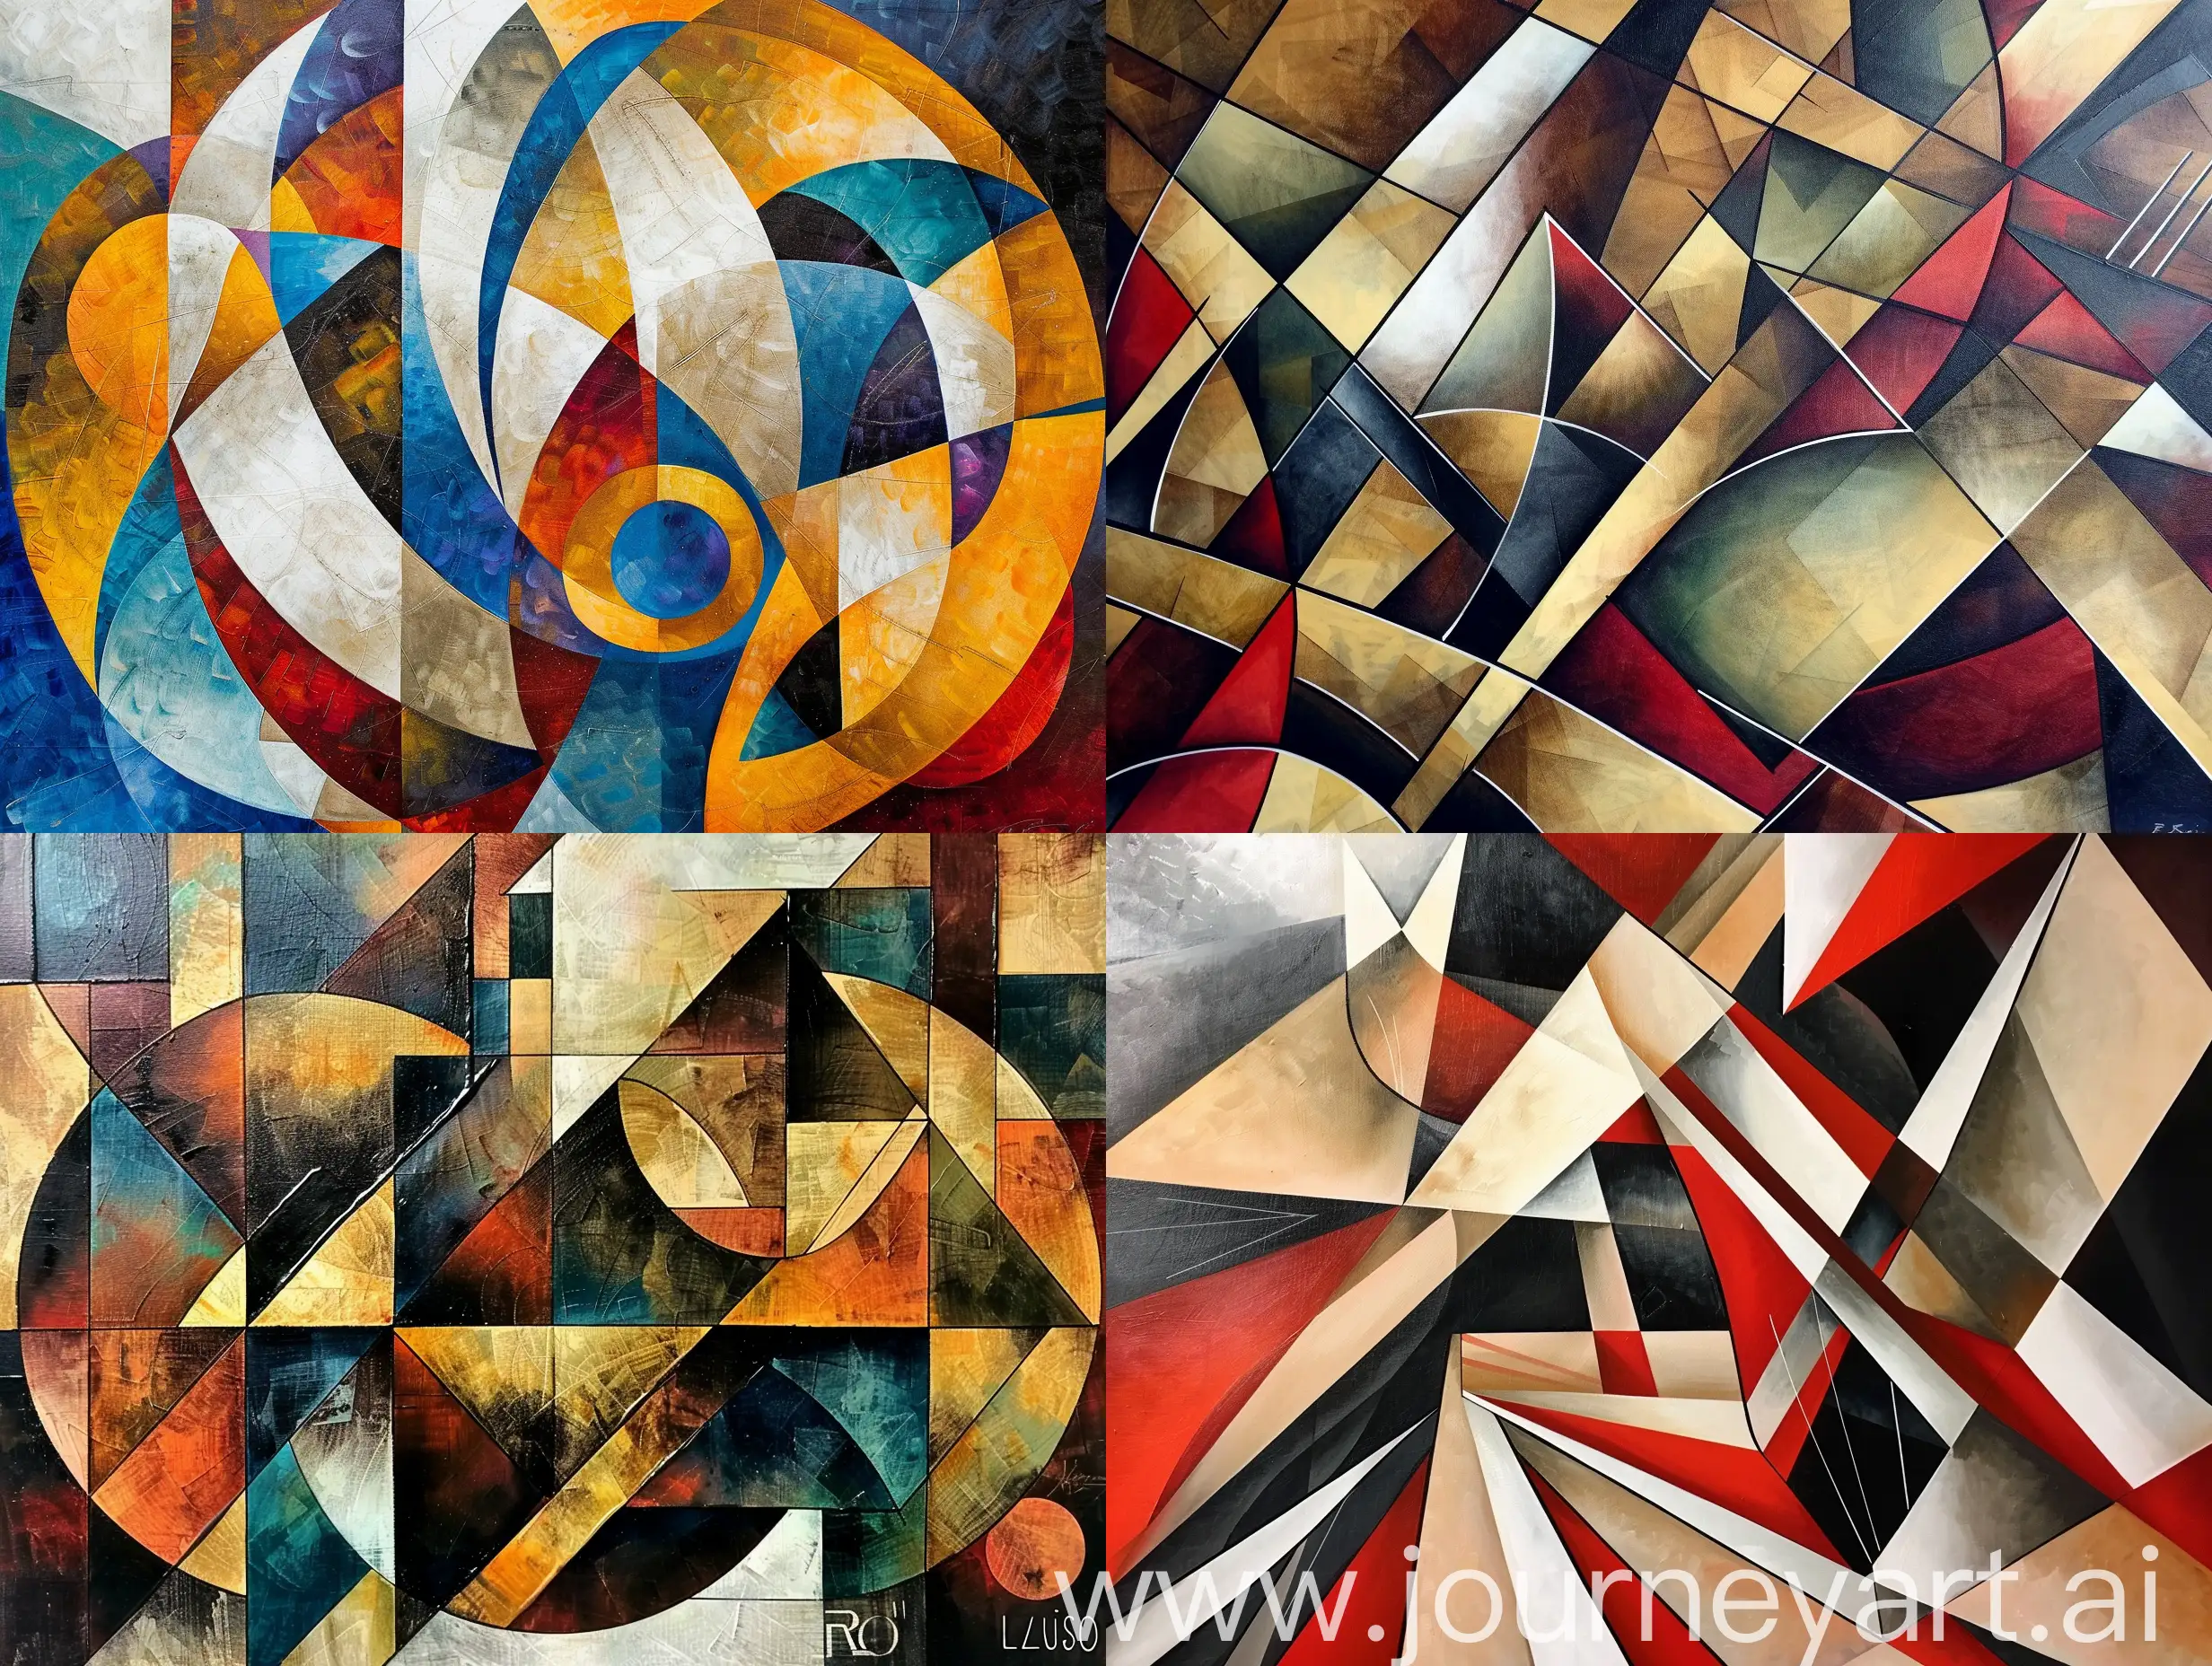 an art deco painting by Luis Royo, behance contest winner, geometric abstract art, art deco, angular, cubism